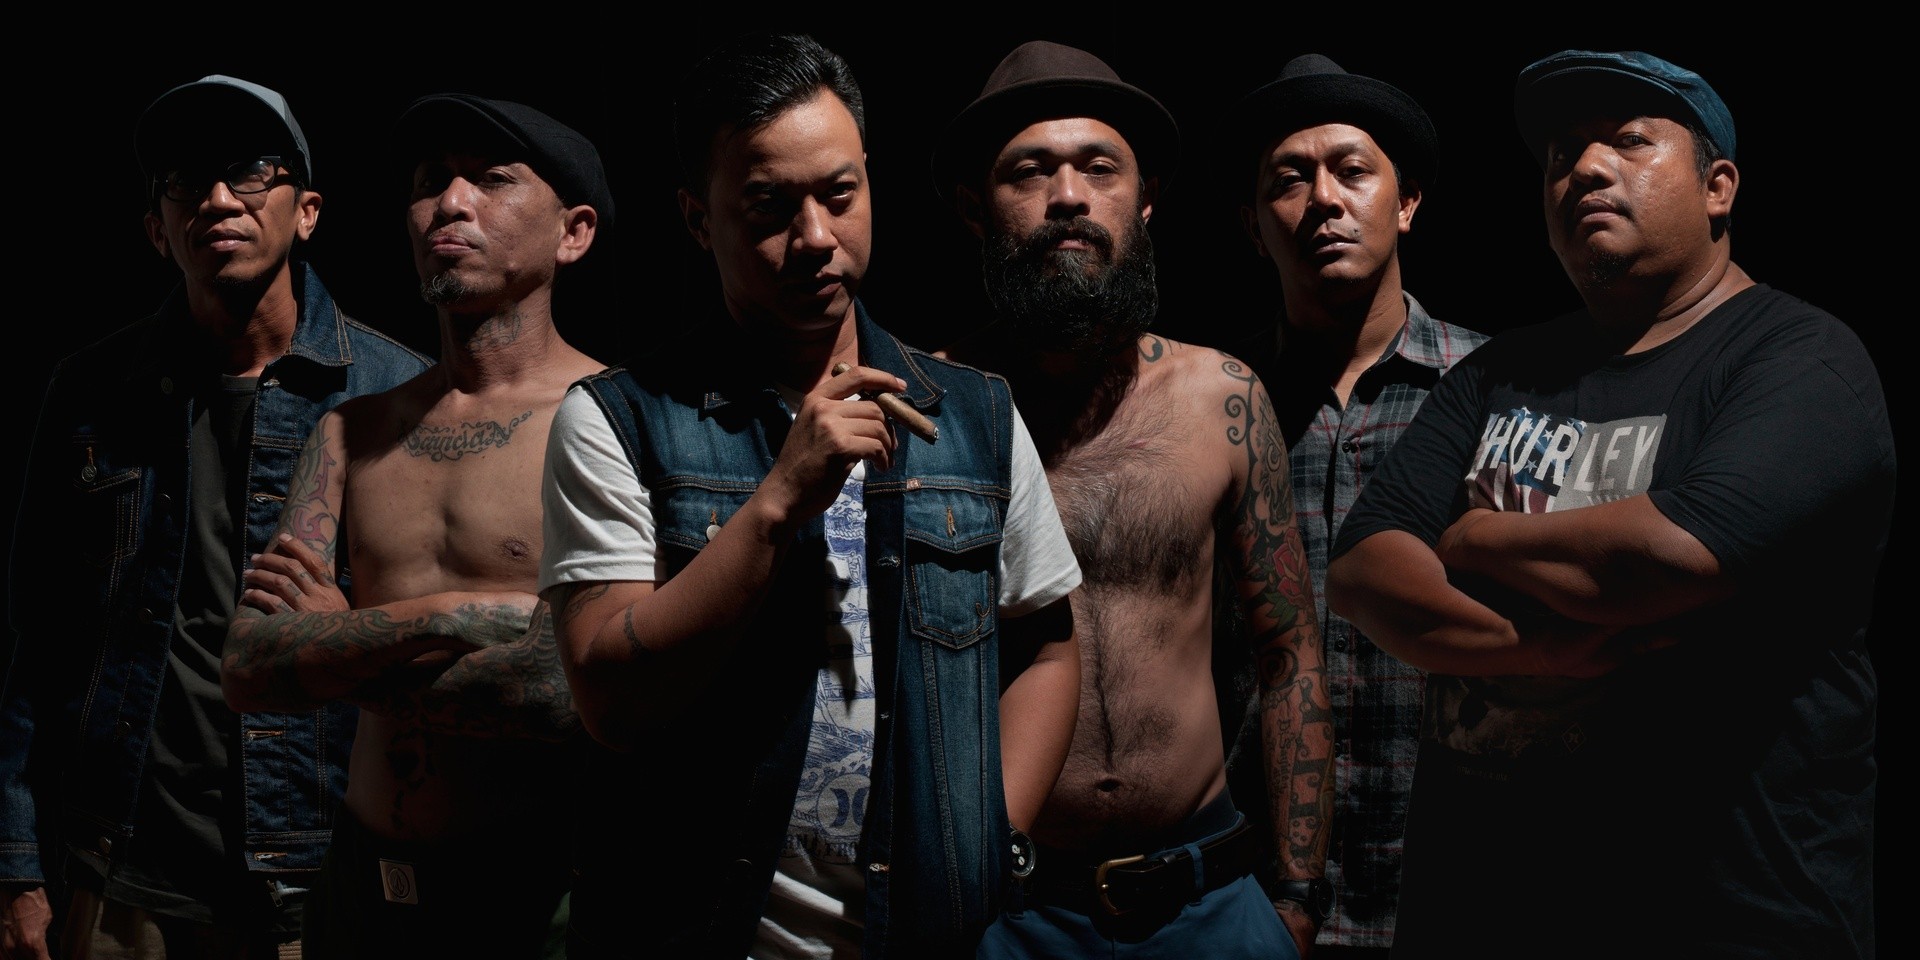 Indonesian ska band Shaggydog releases album 'Putra Nusantara' on vinyl